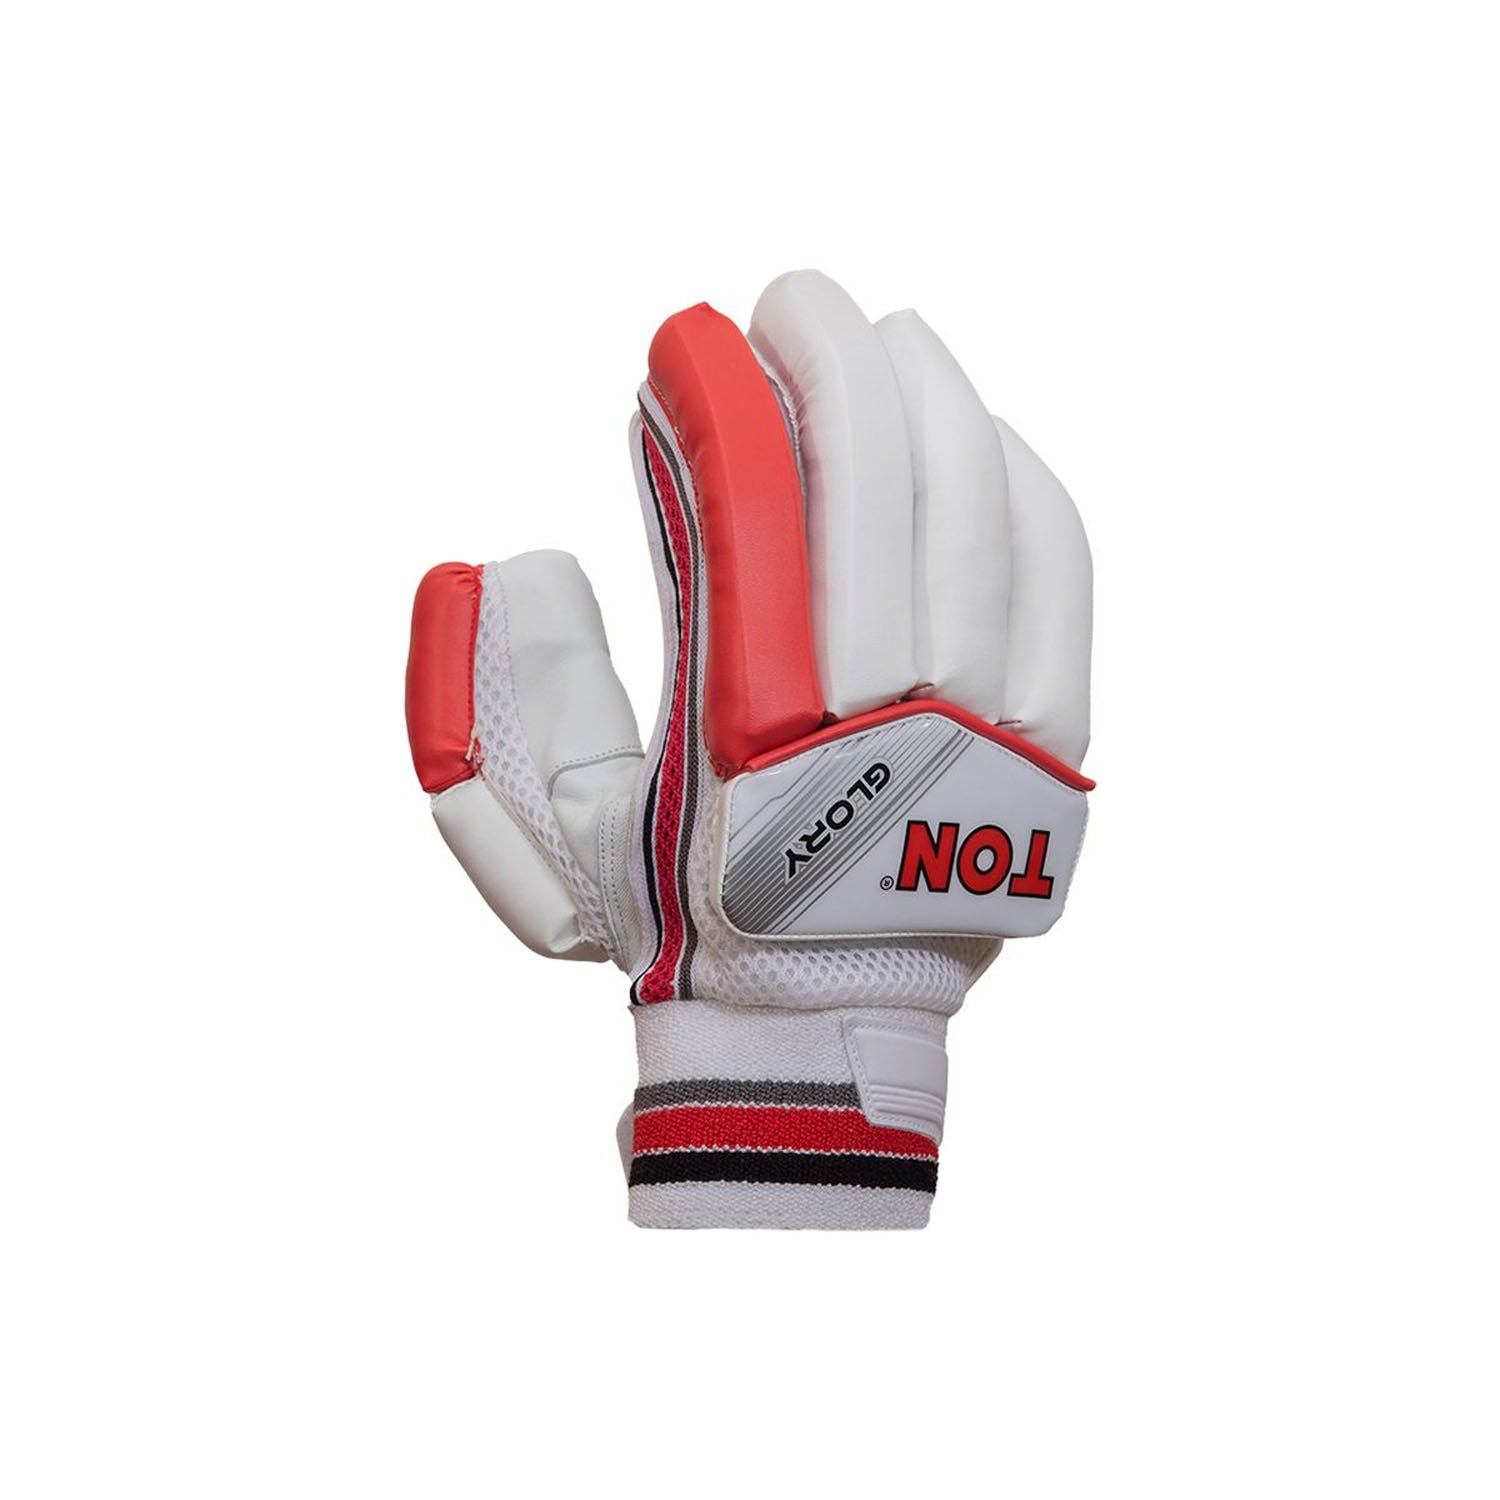 SS Ton Glory Left Hand Cricket Batting Gloves - Best Price online Prokicksports.com